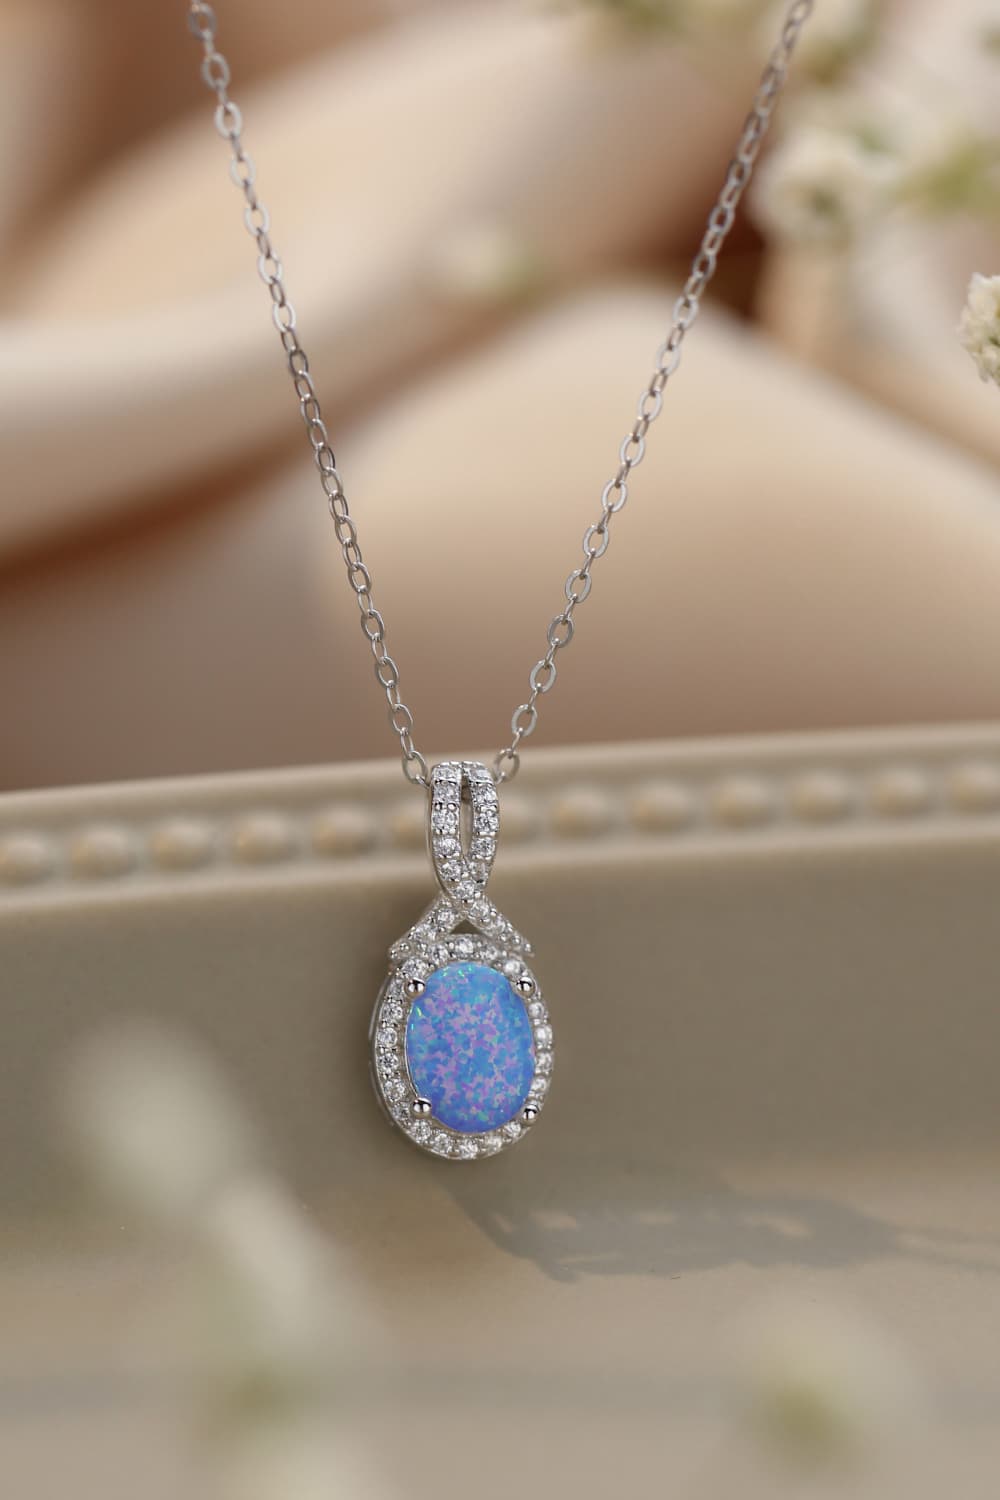 Feeling My Best - Captivating Opal Pendant Necklace - Awaken Your True Romance - Guy Christopher